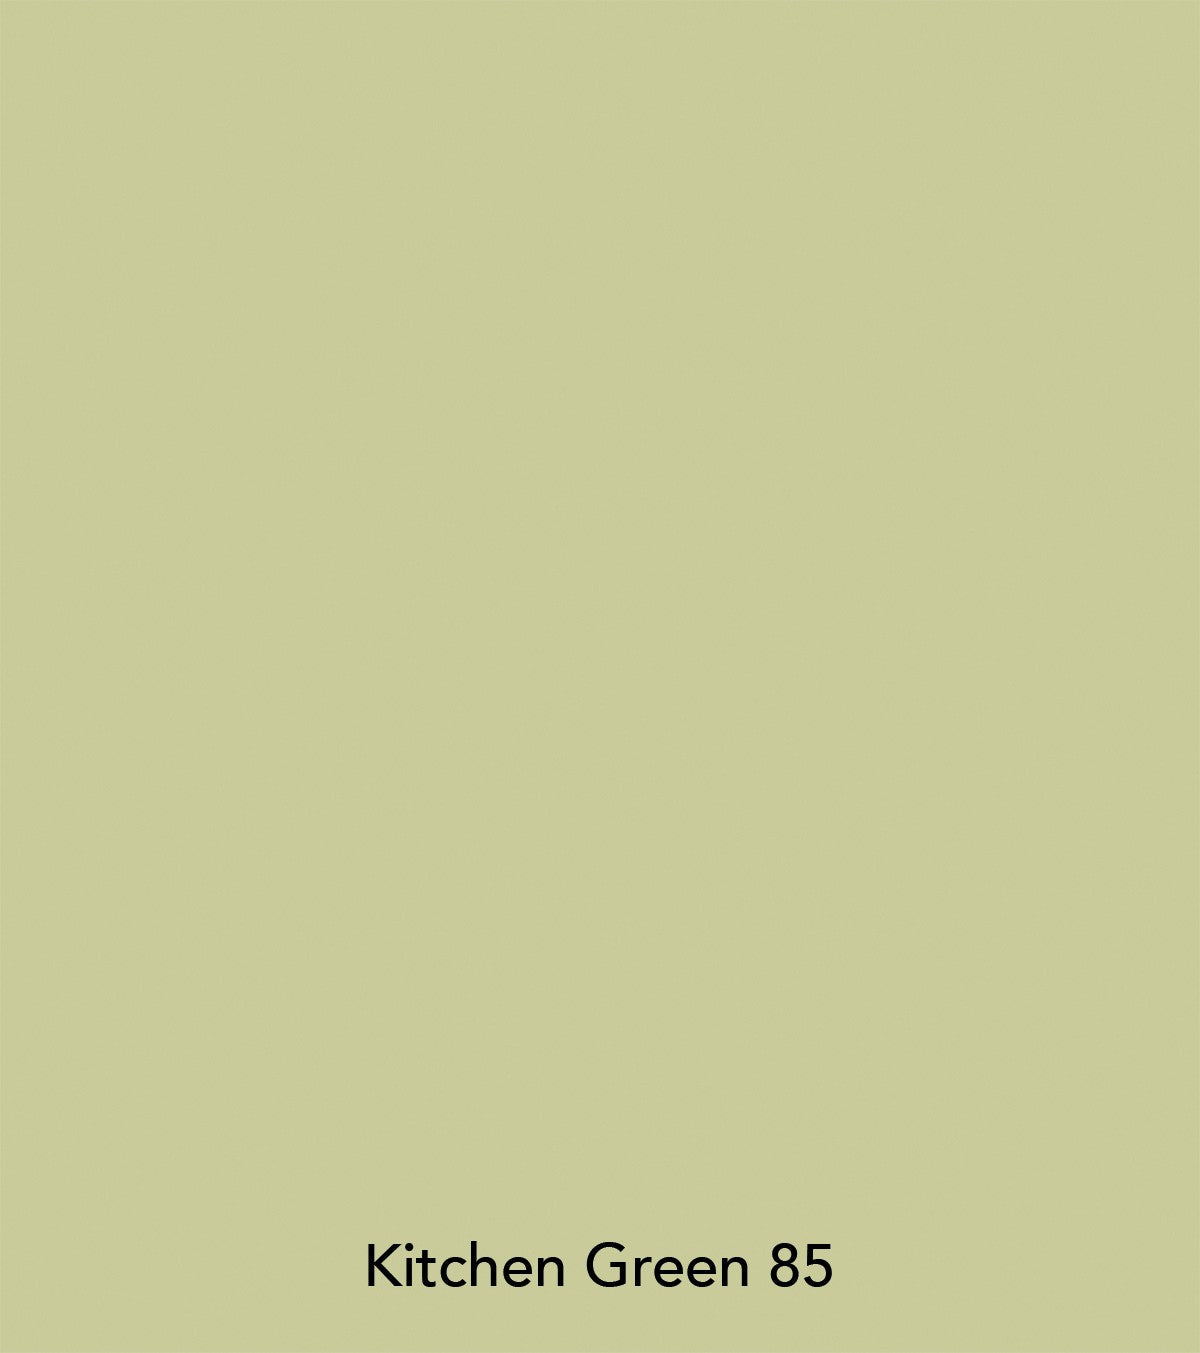 Vernice Little Greene - Verde cucina (85)